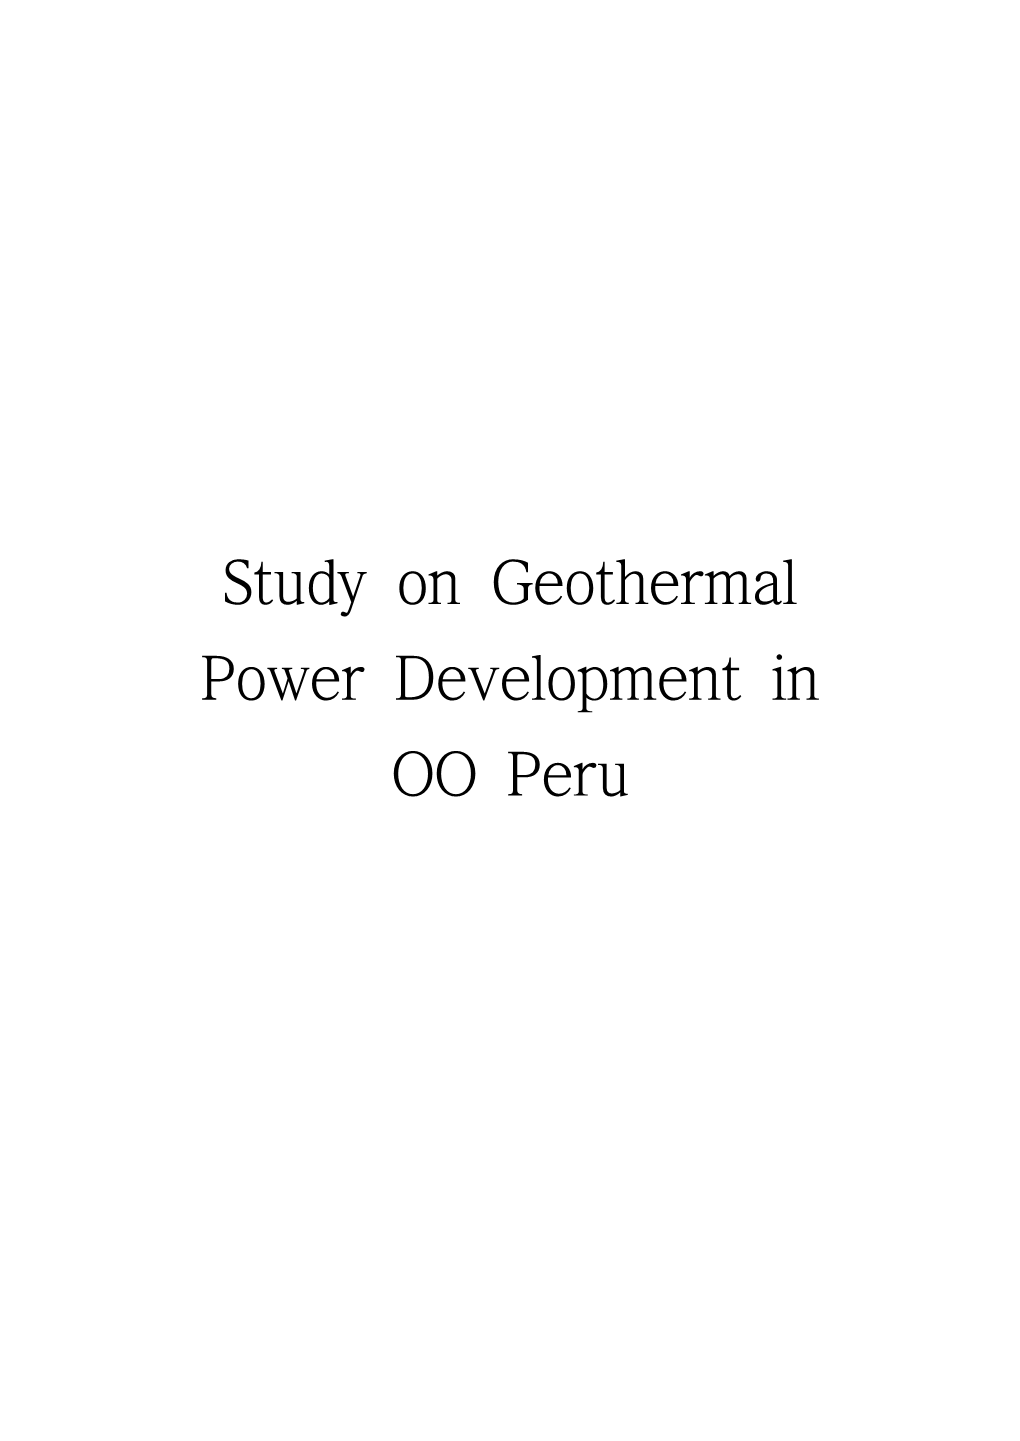 Study on Geothermal Power Development in OO Peru 목 차